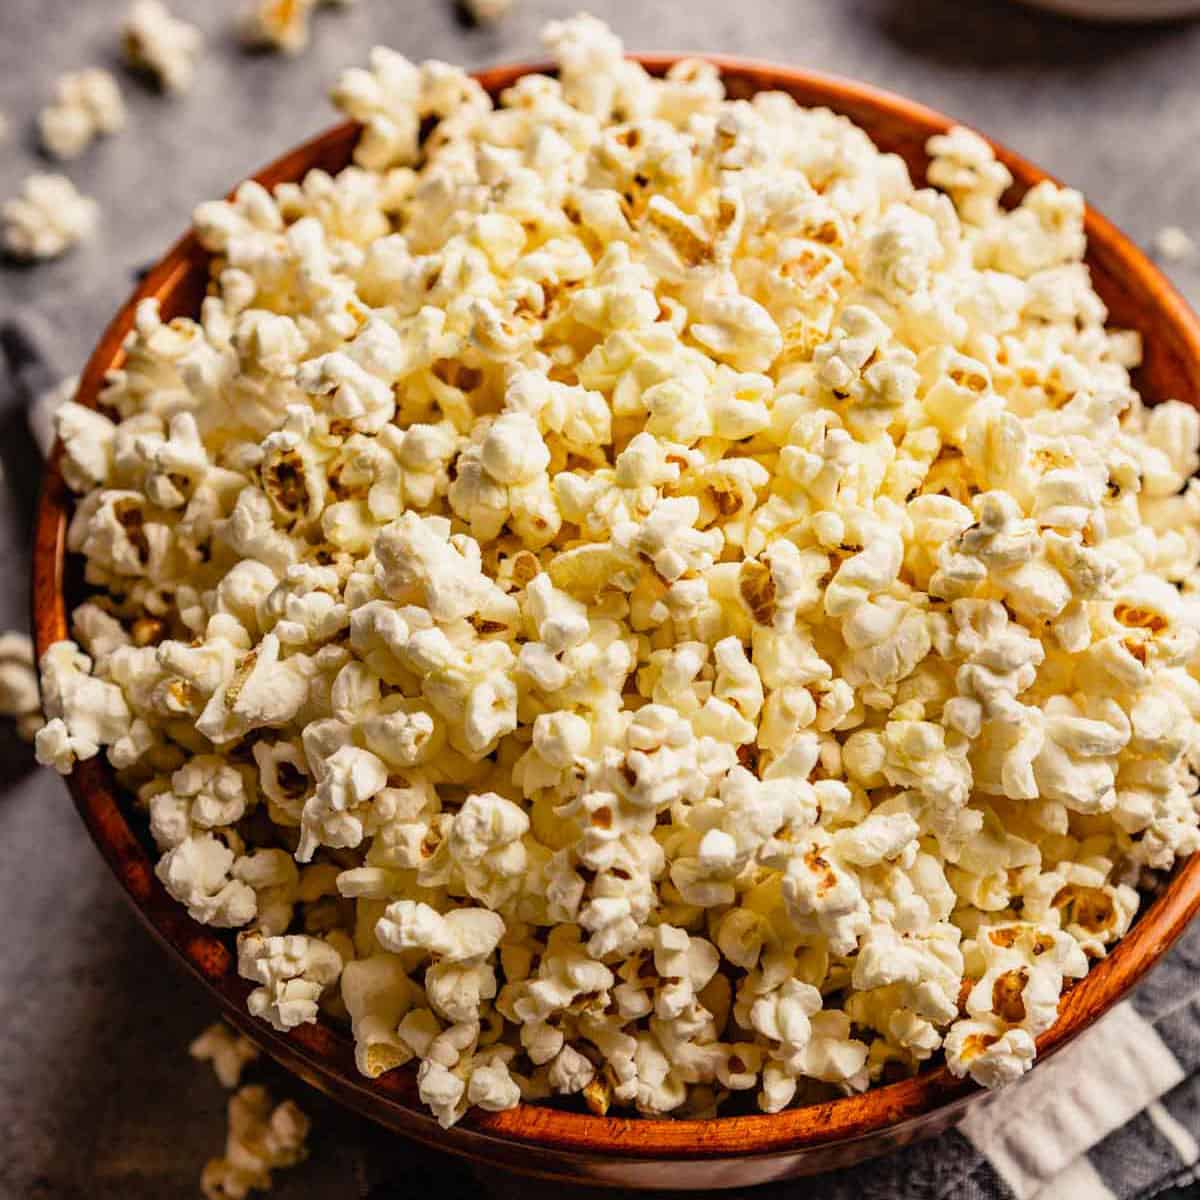 How to Make Popcorn